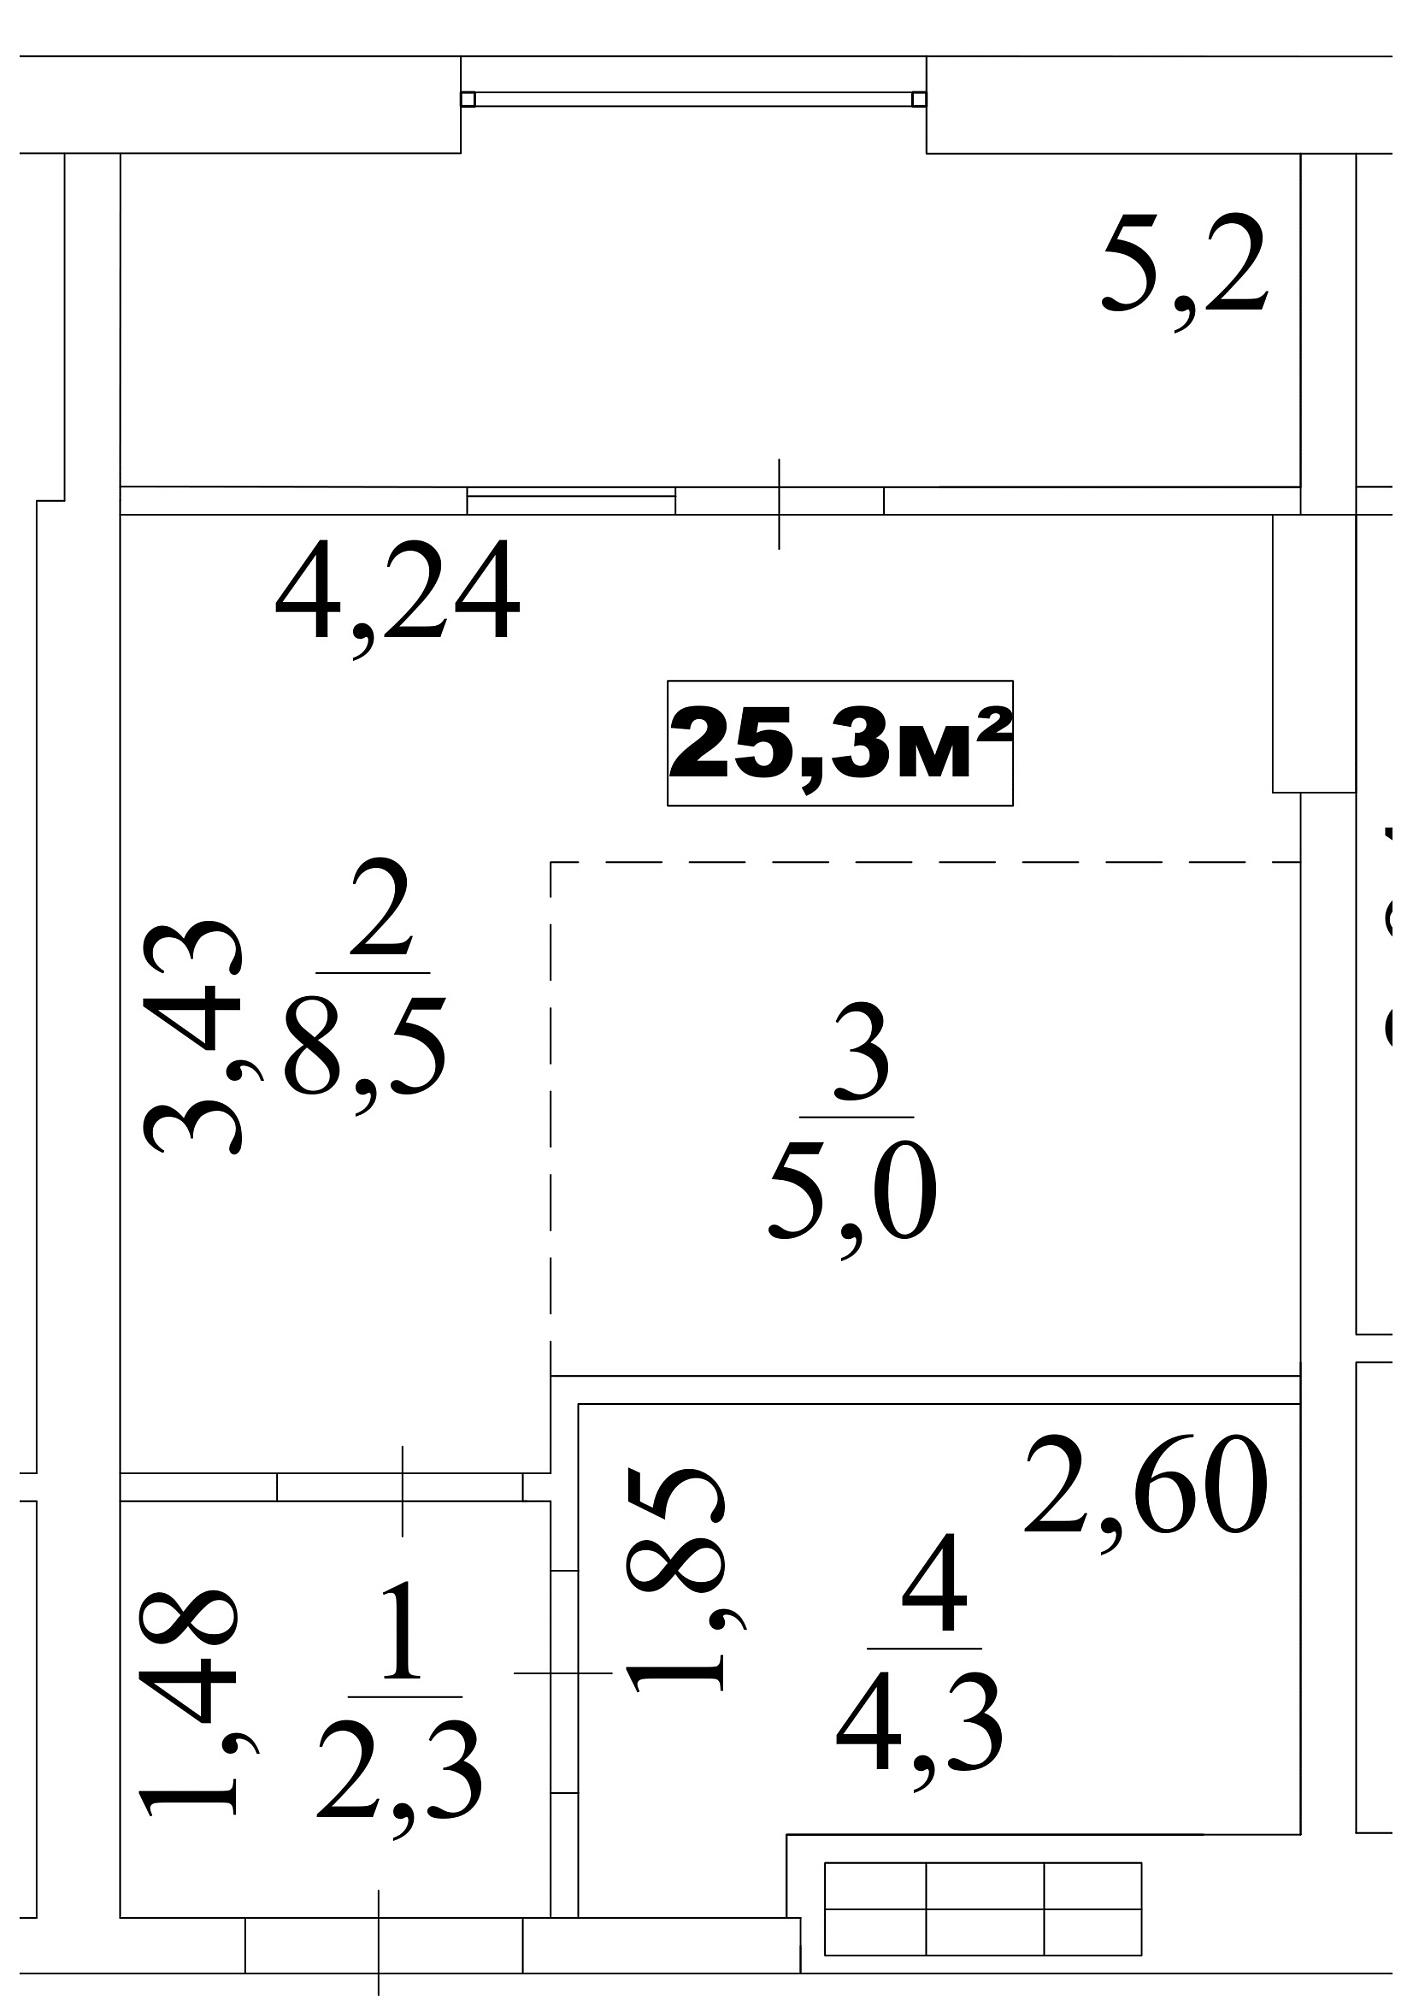 Planning Smart flats area 25.3m2, AB-10-01/0003в.